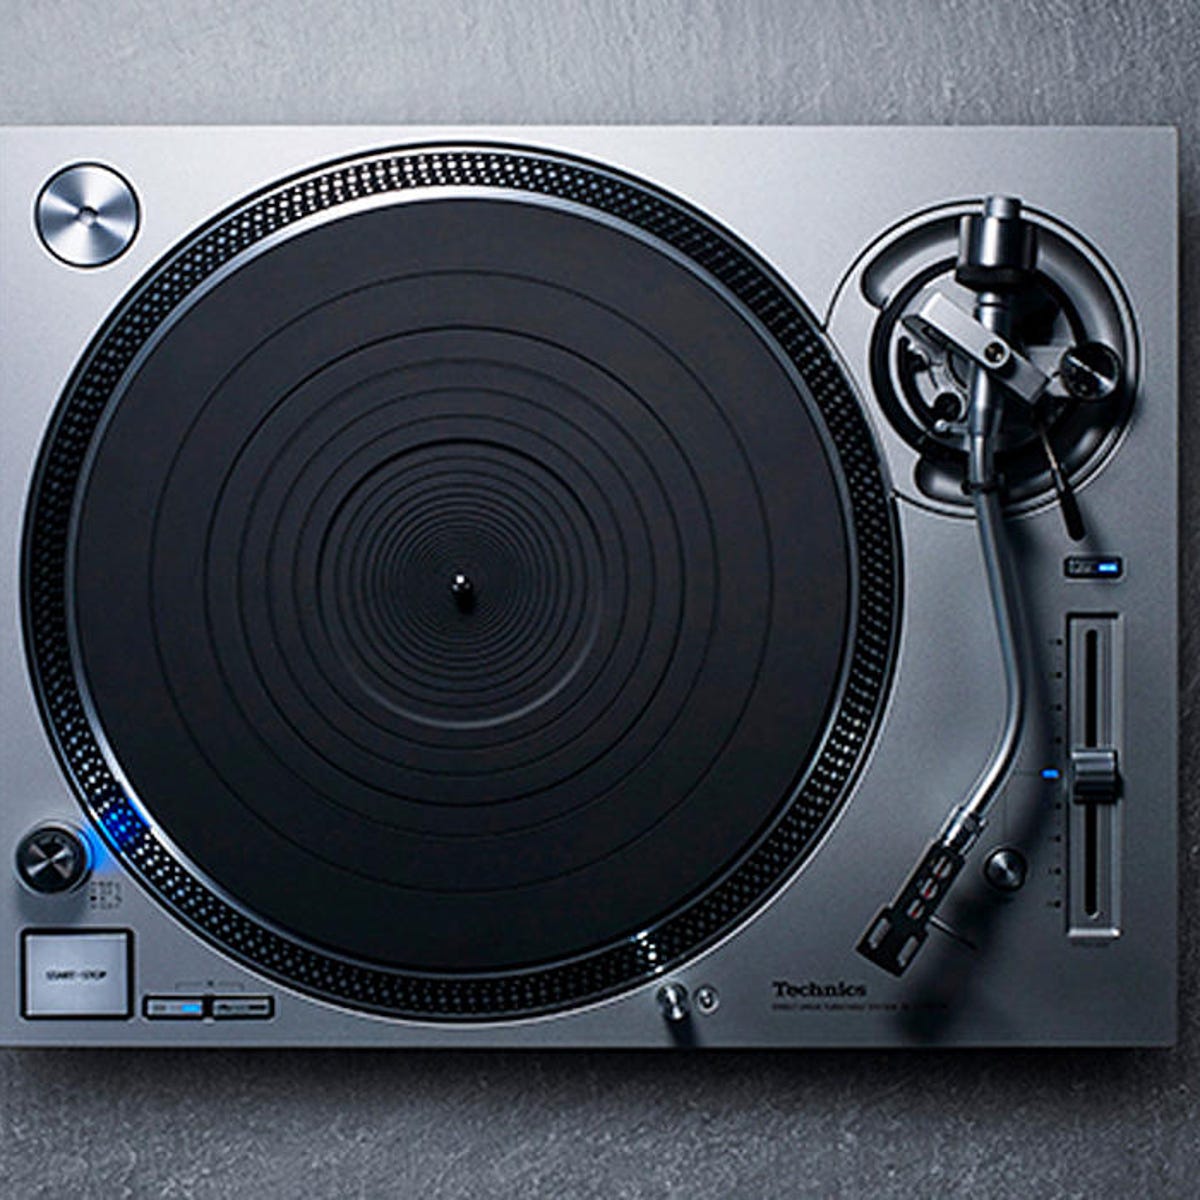 Technics SL-1200GR turntable, for DJs or audiophiles or both? - CNET